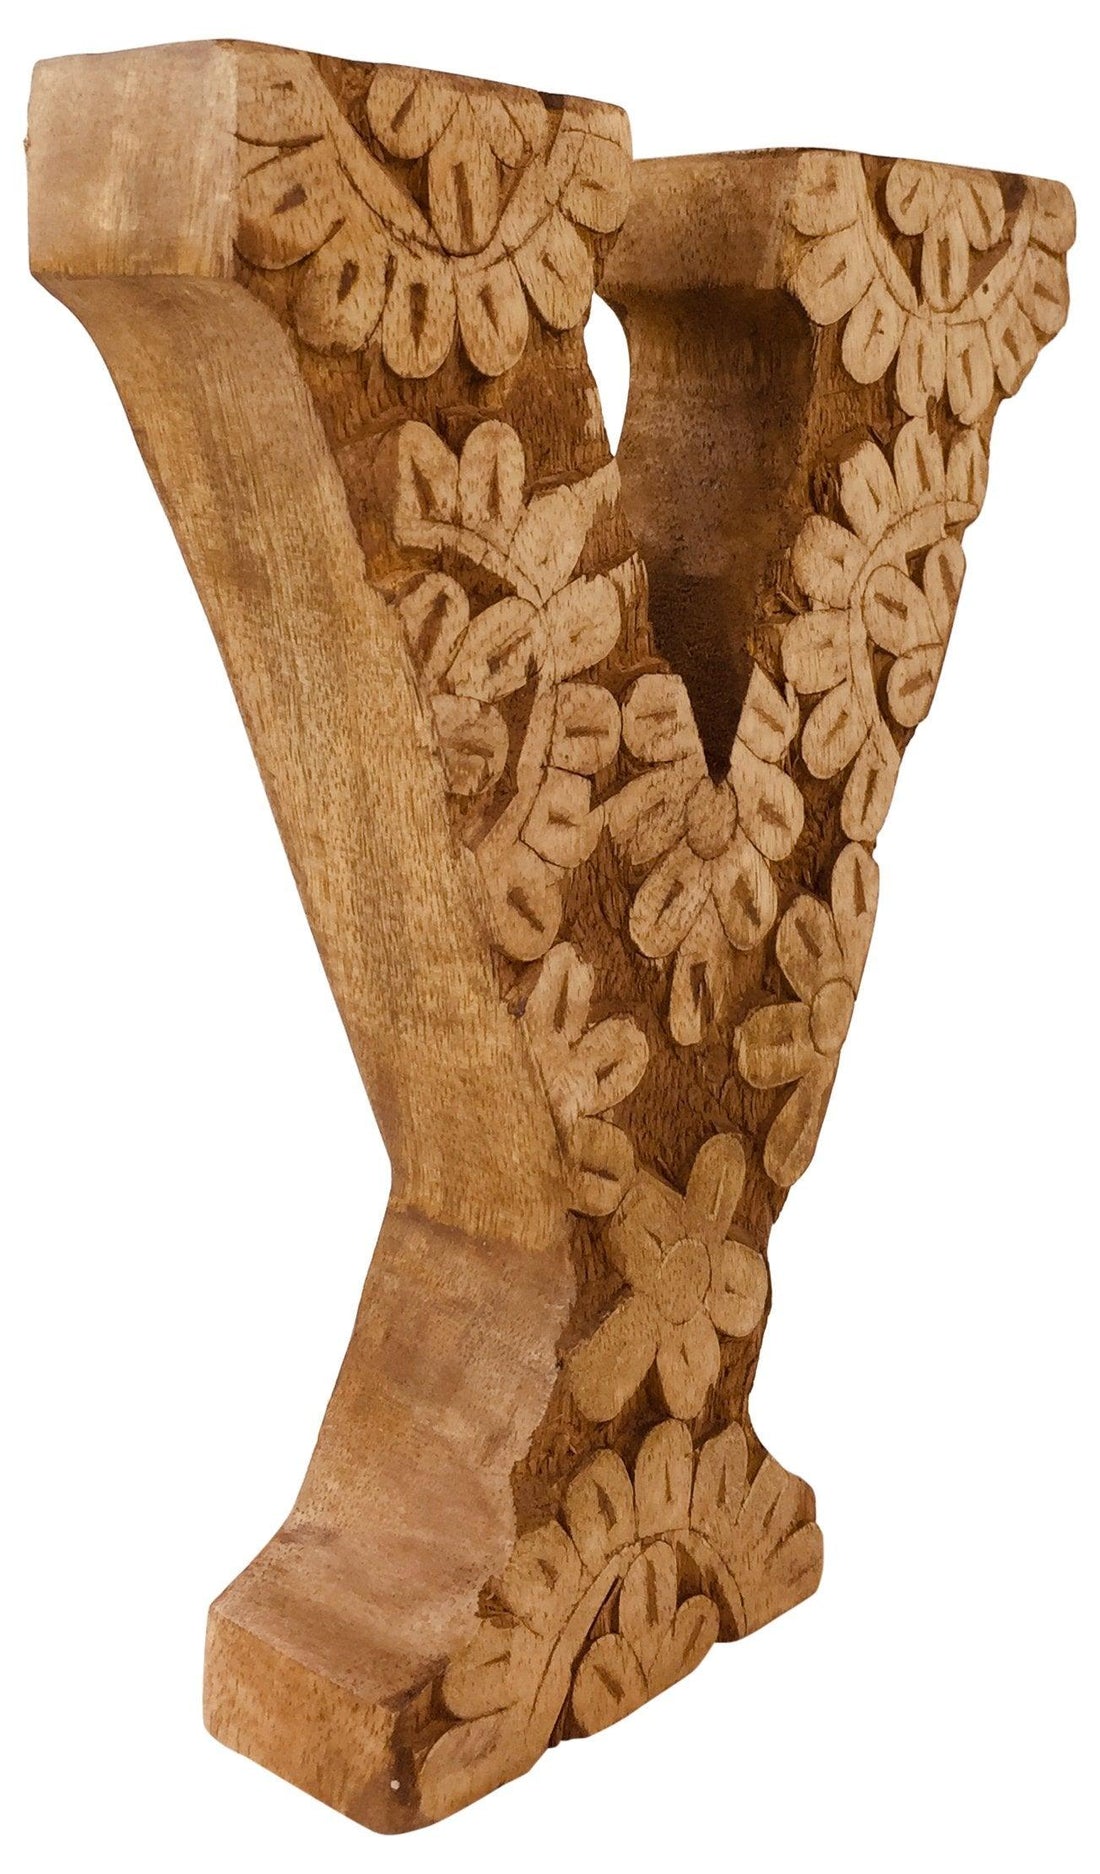 Hand Carved Wooden Flower Letter Y - £12.99 - Single Letters 